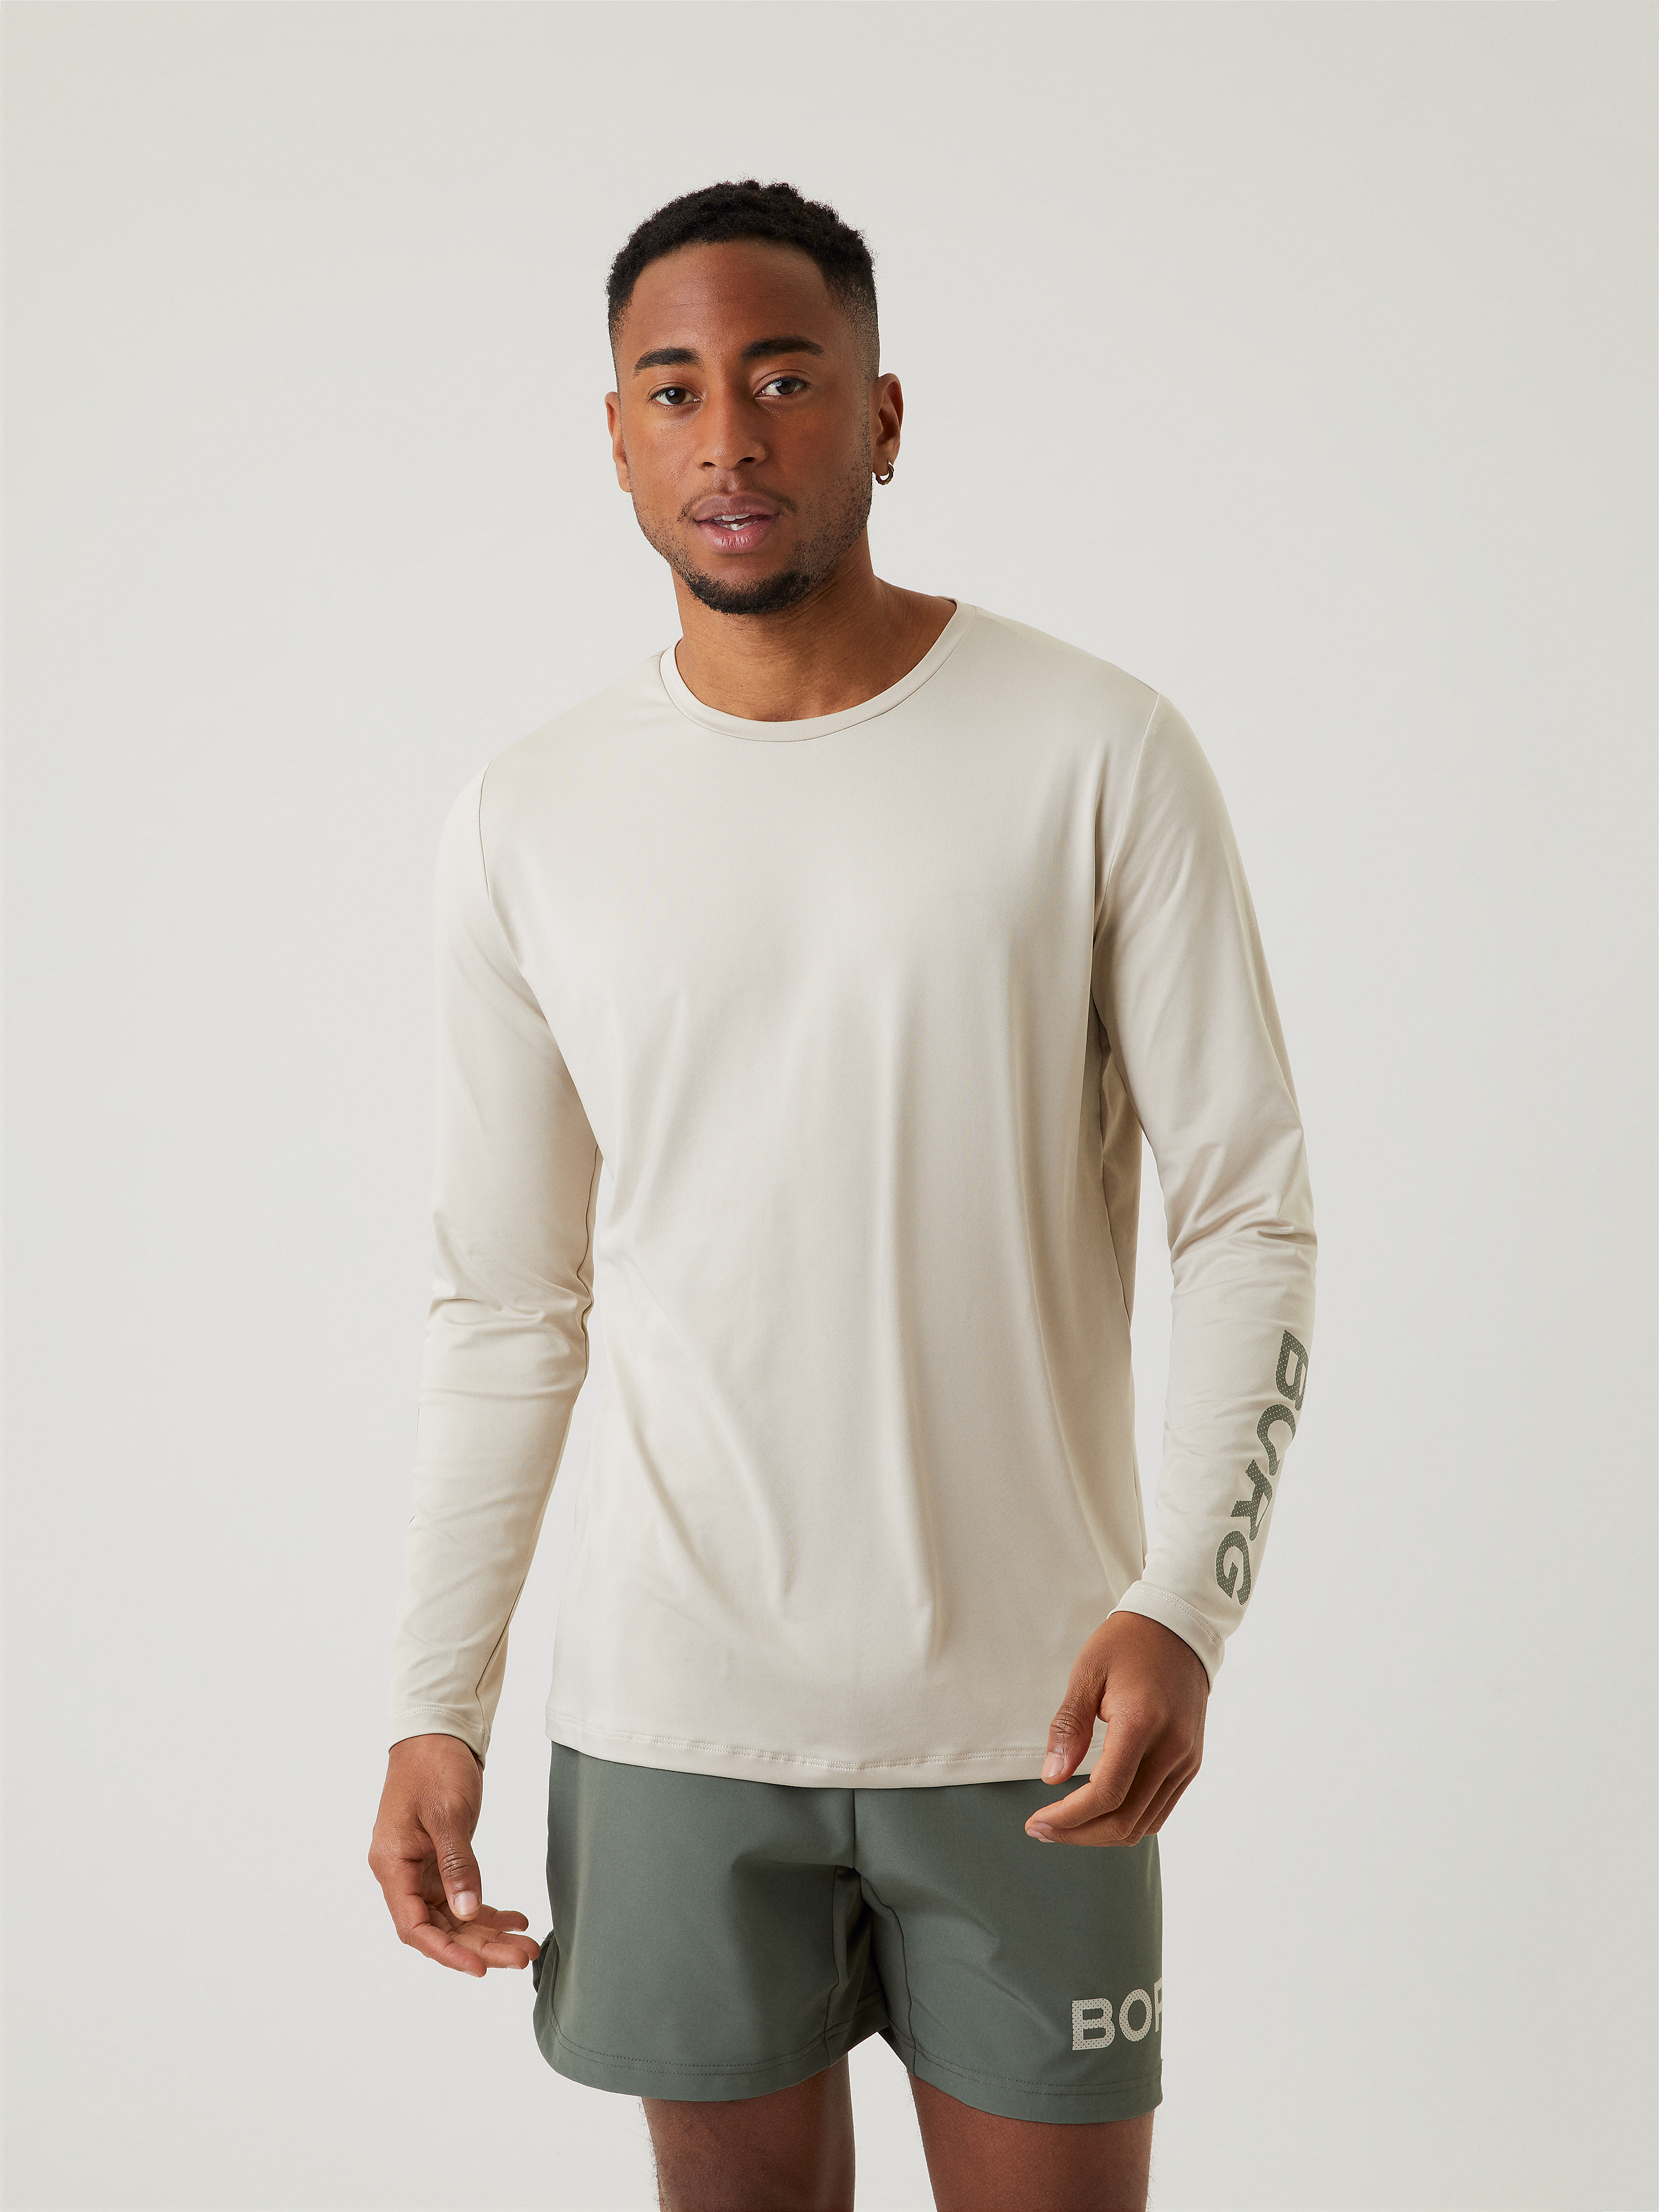 M Medium NEW BJORN BORG Sport Men's Gray/ Green Neon Short Sleeve T-Shirt Size 